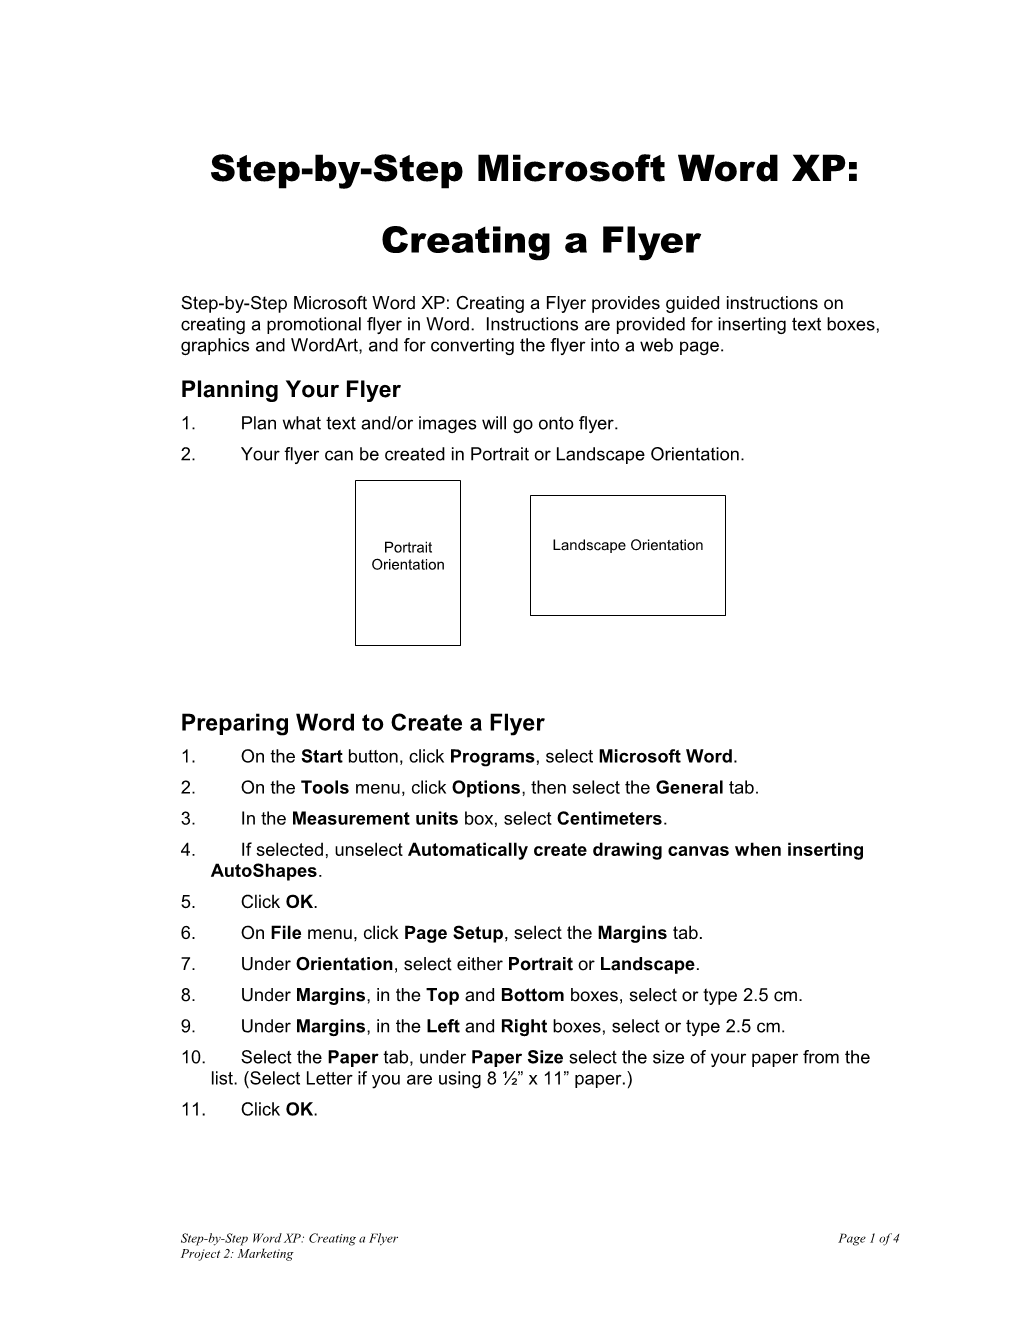 Step-By-Step Microsoft Word XP